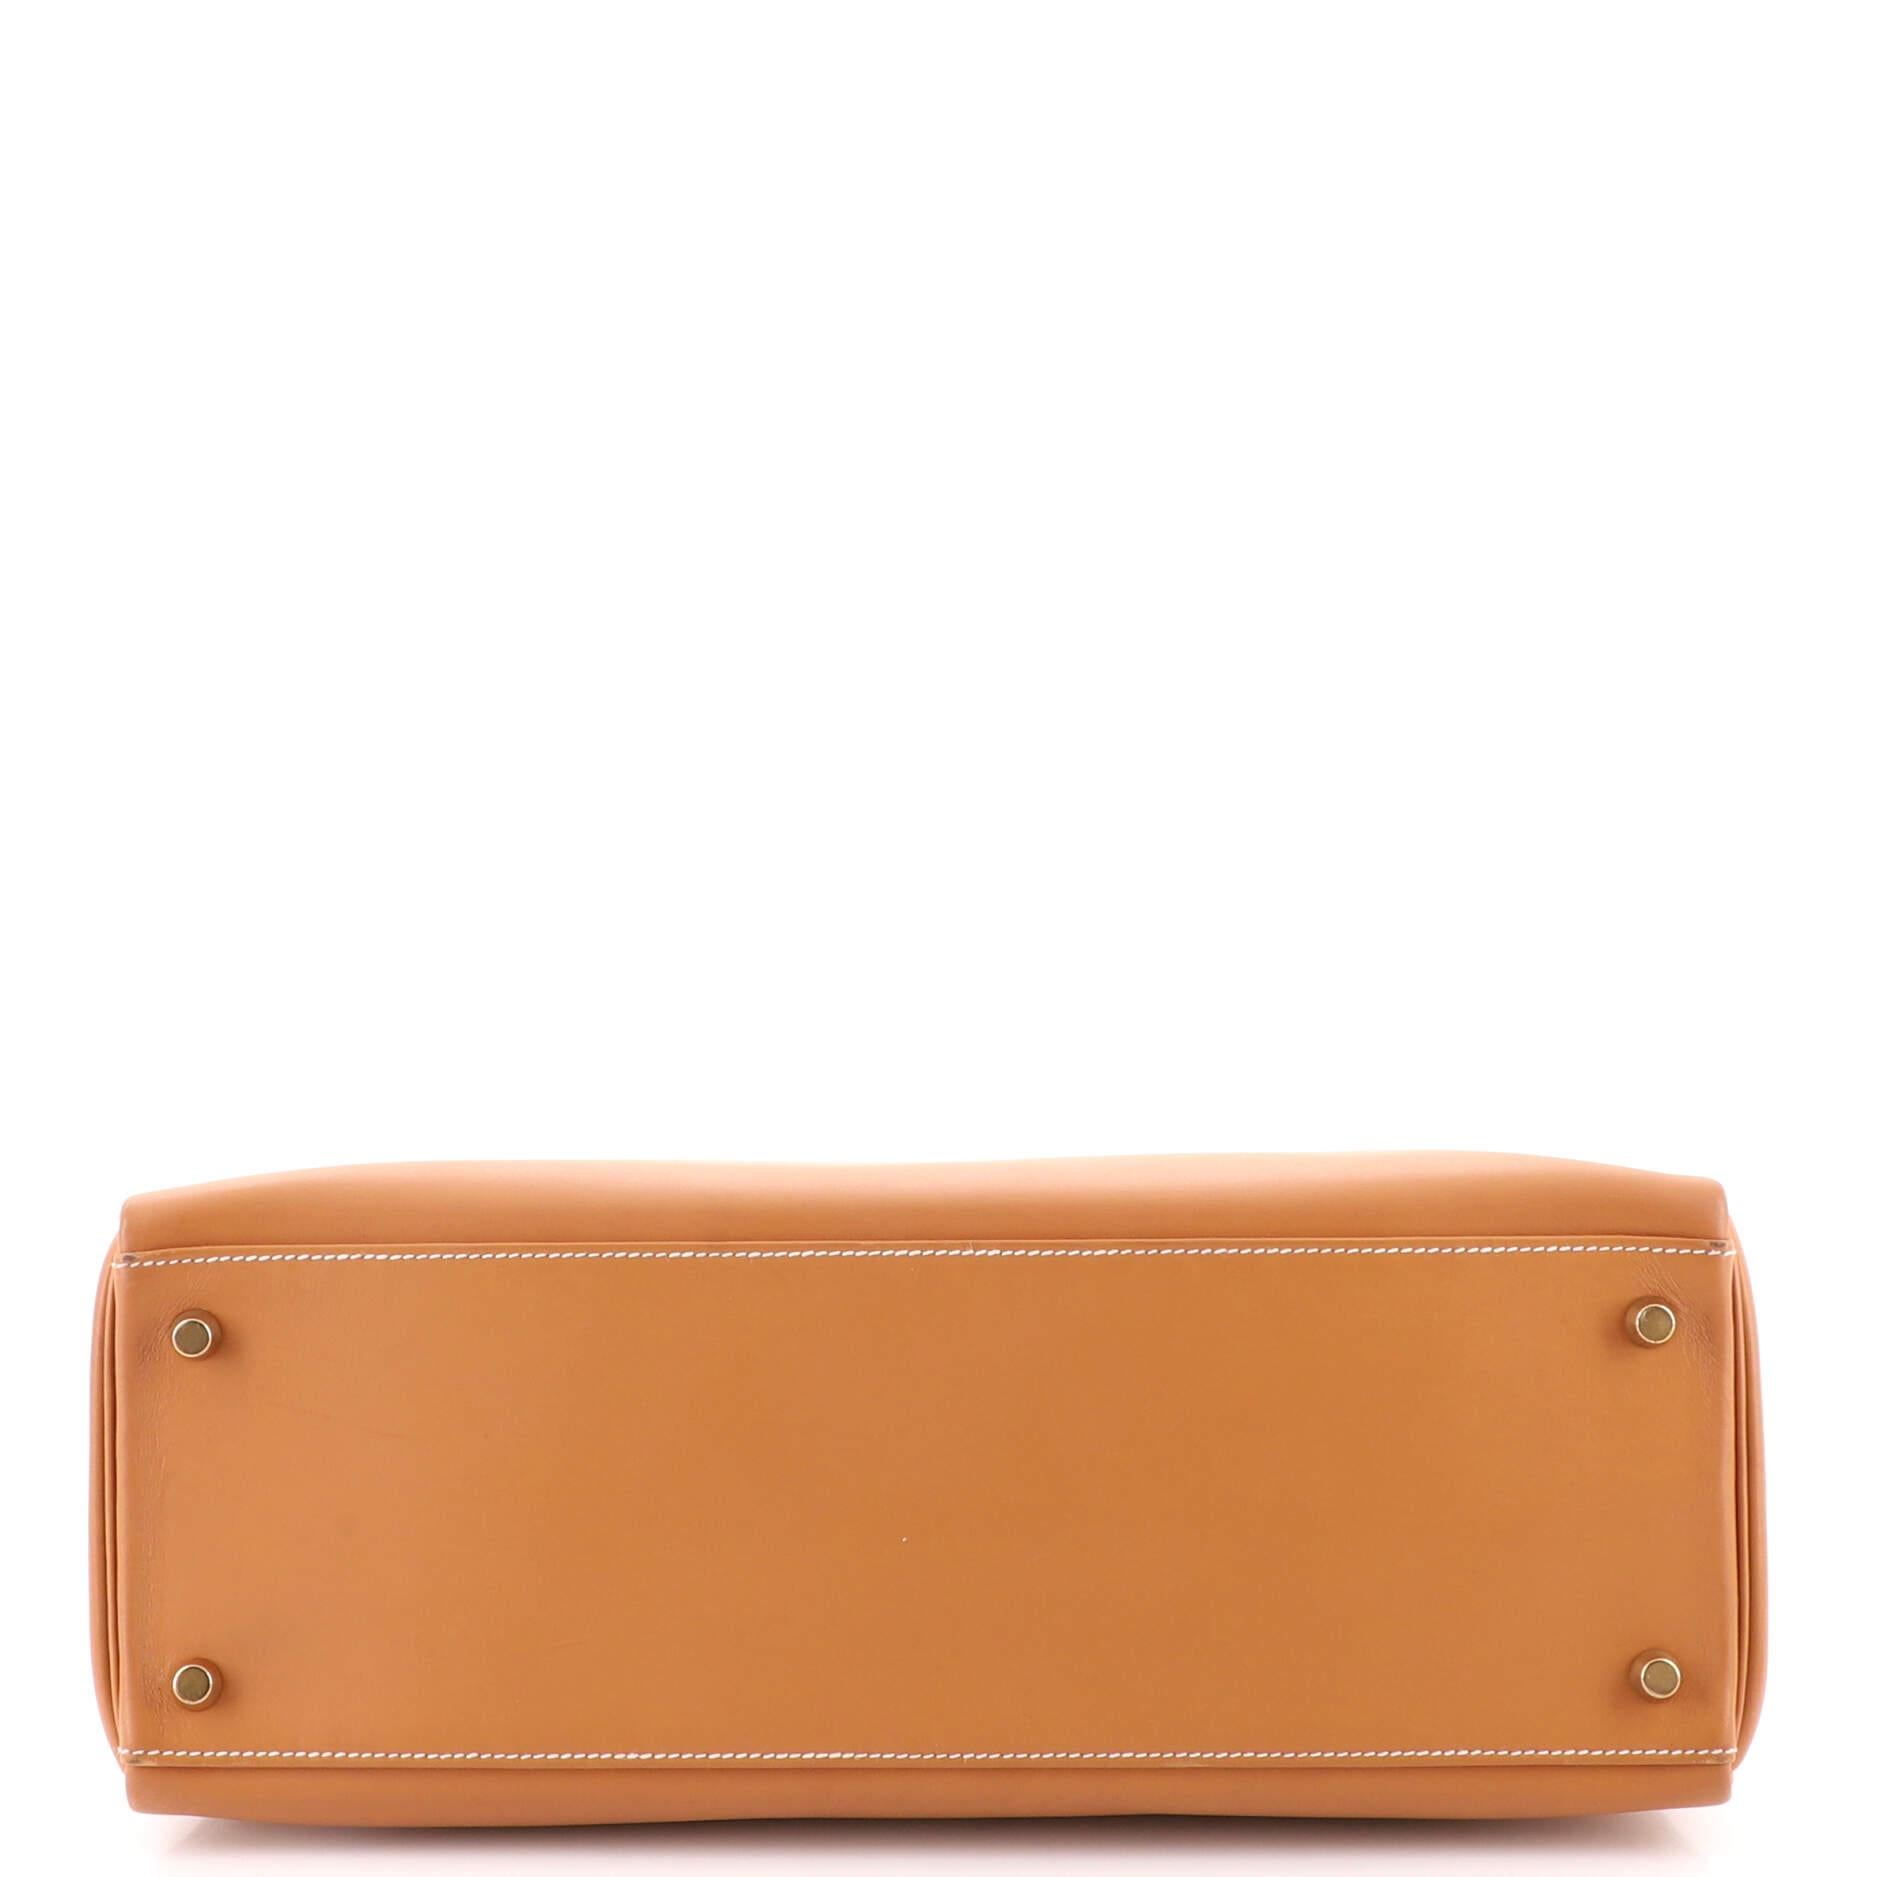 Hermes Kelly Handbag Natural Chamonix with Gold Hardware 35 1